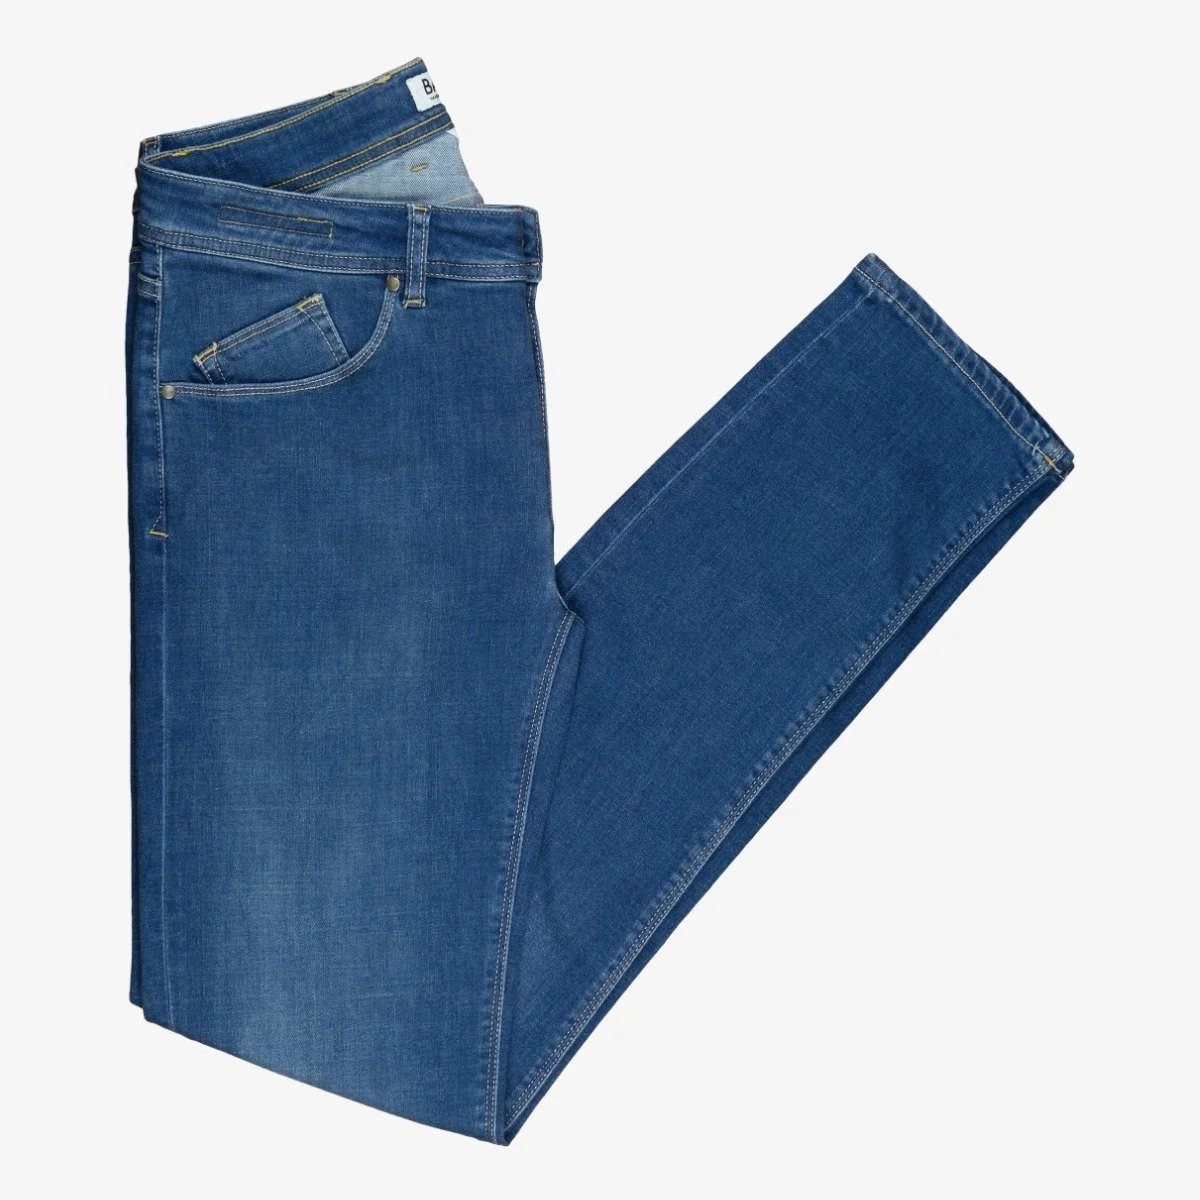 Barmas Dean blue slim fit 9.5 oz. washed jeans